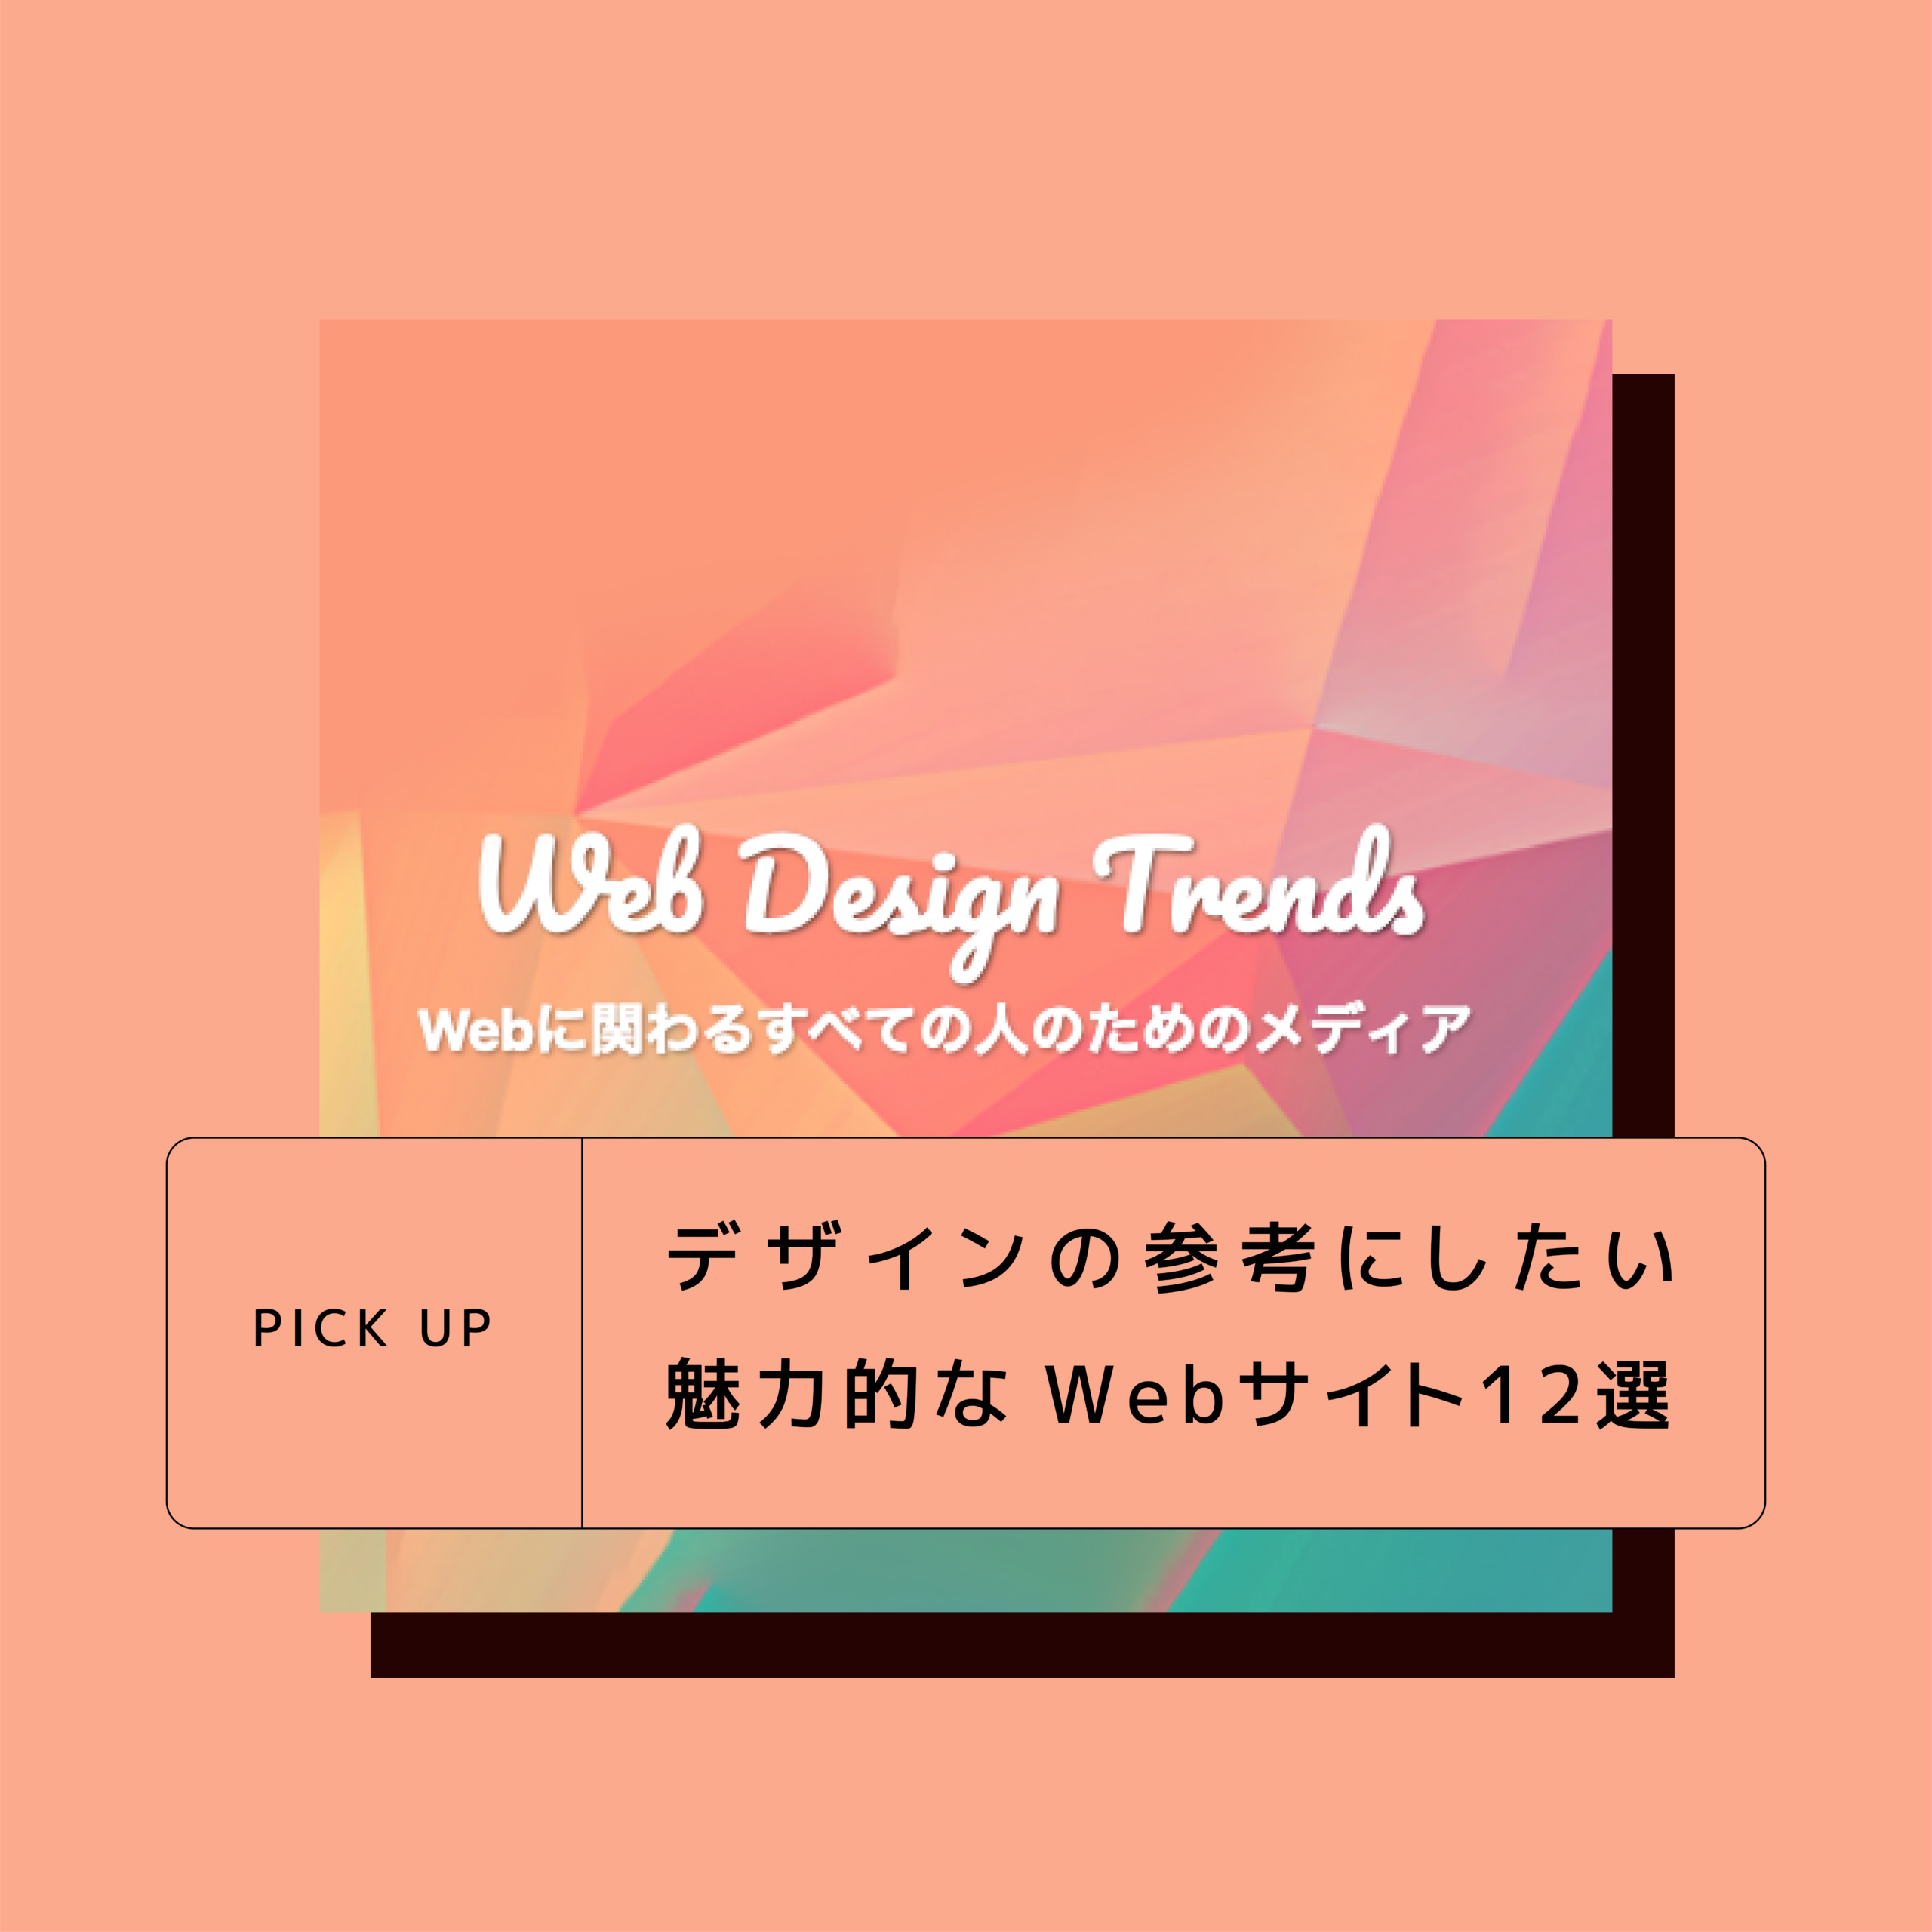 Web Design Trendsさんにご紹介いただきました